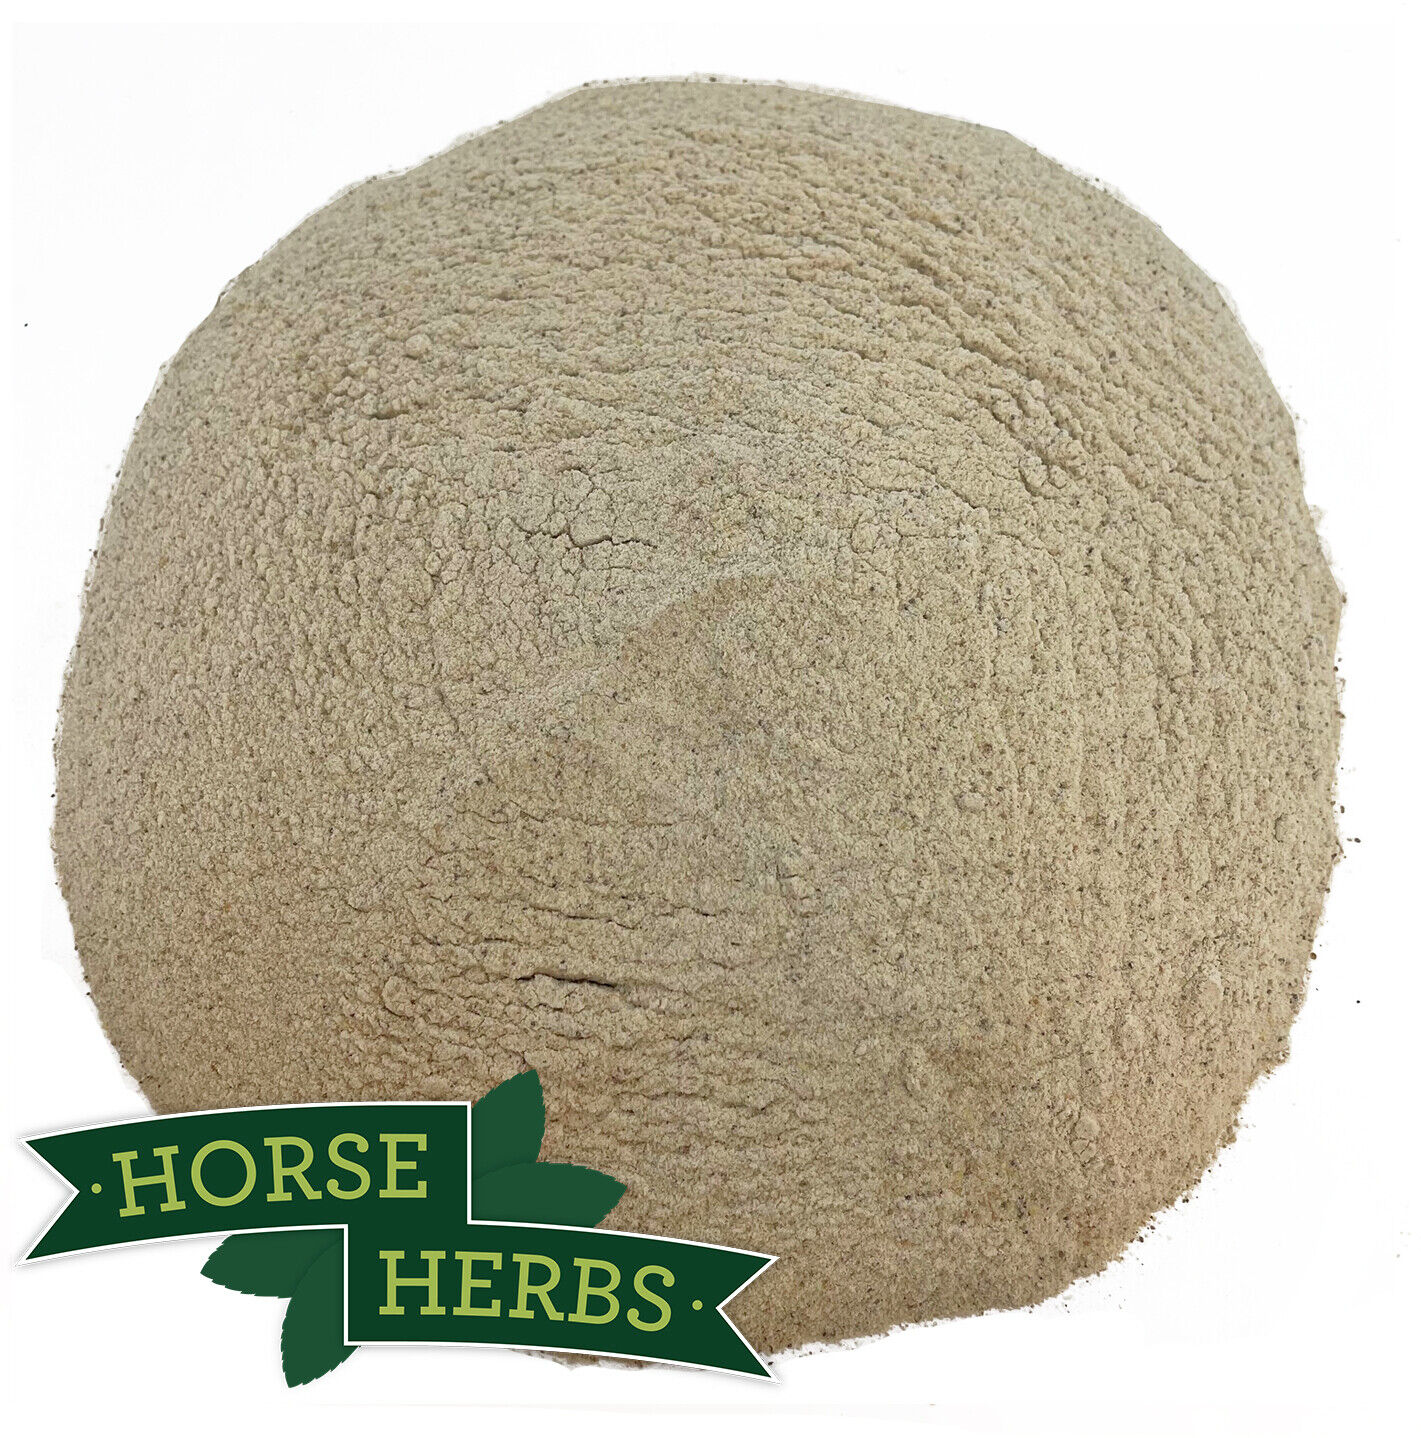 Horse Herbs Boswellia Serrata Powder 1kg - Natural Pain Relief for Horses Equine